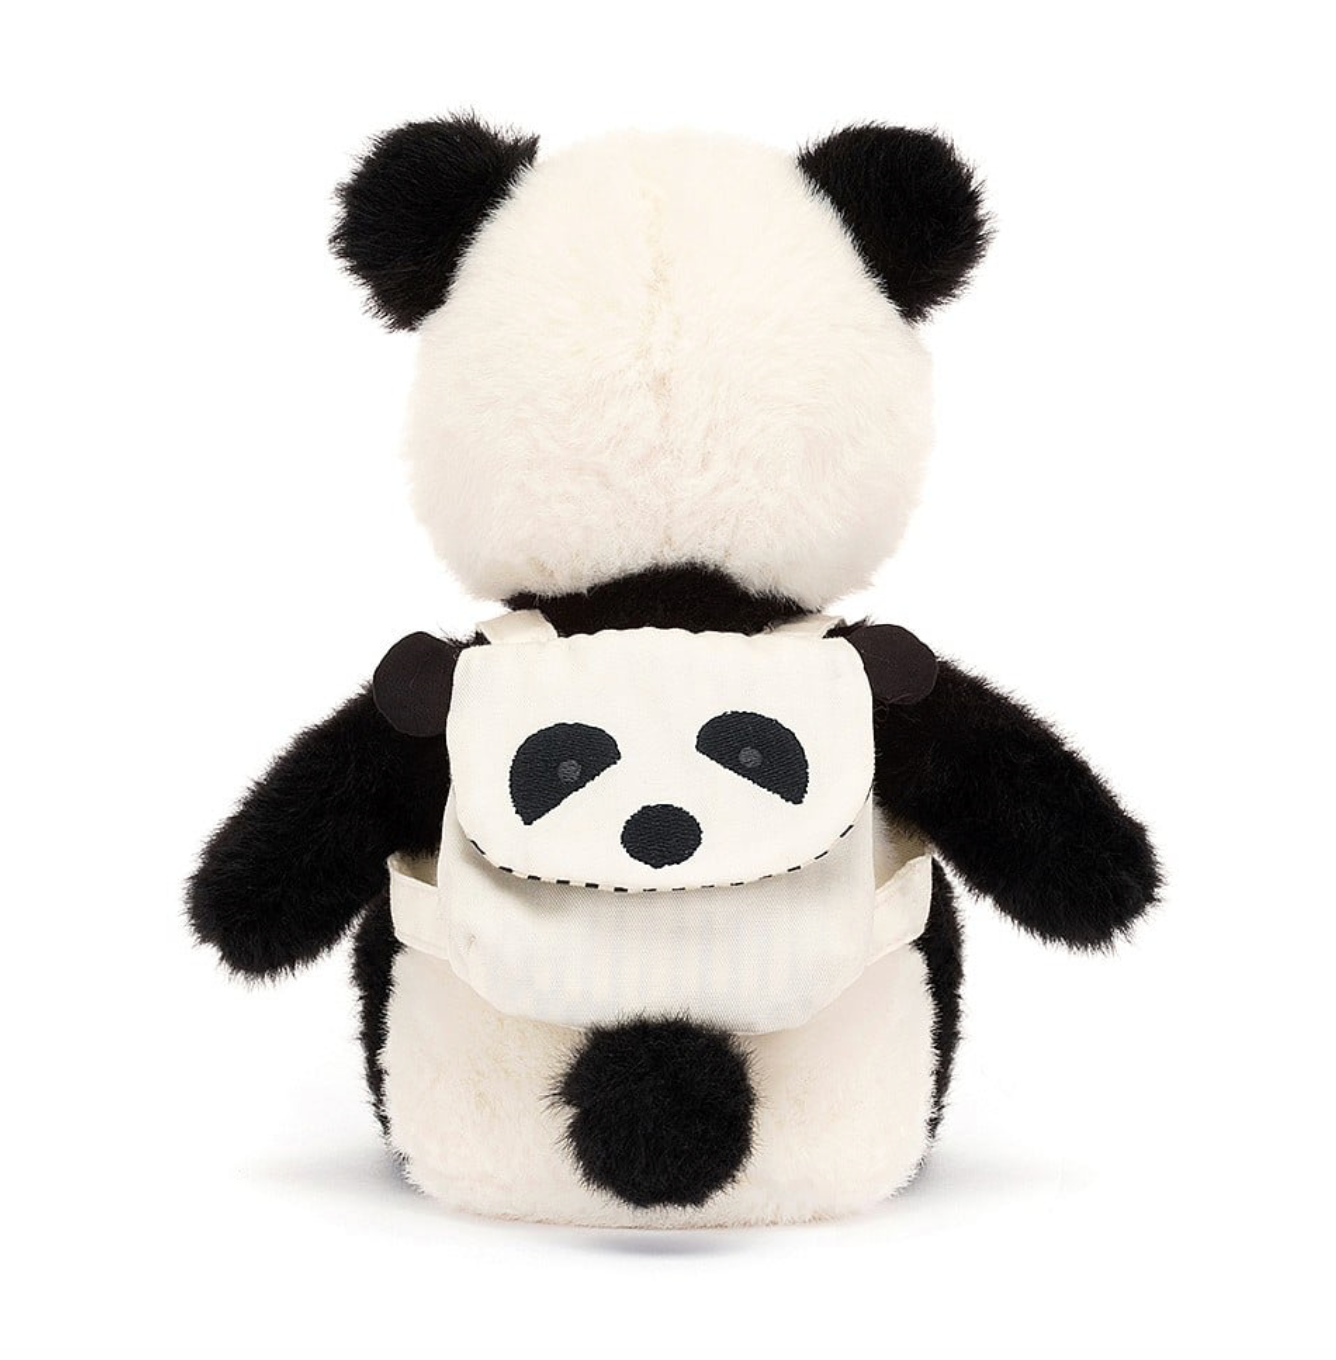 Backpack Panda